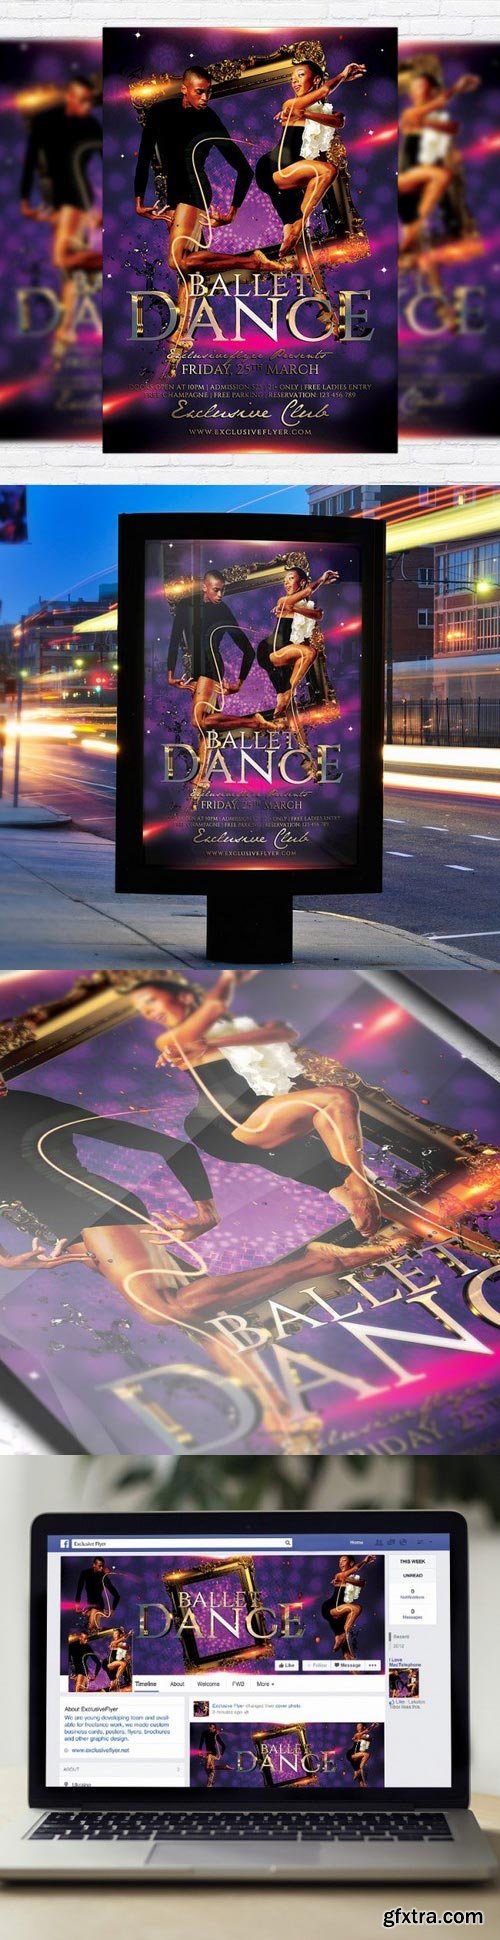 Ballet Dance Flyer PSD Template + Facebook Cover